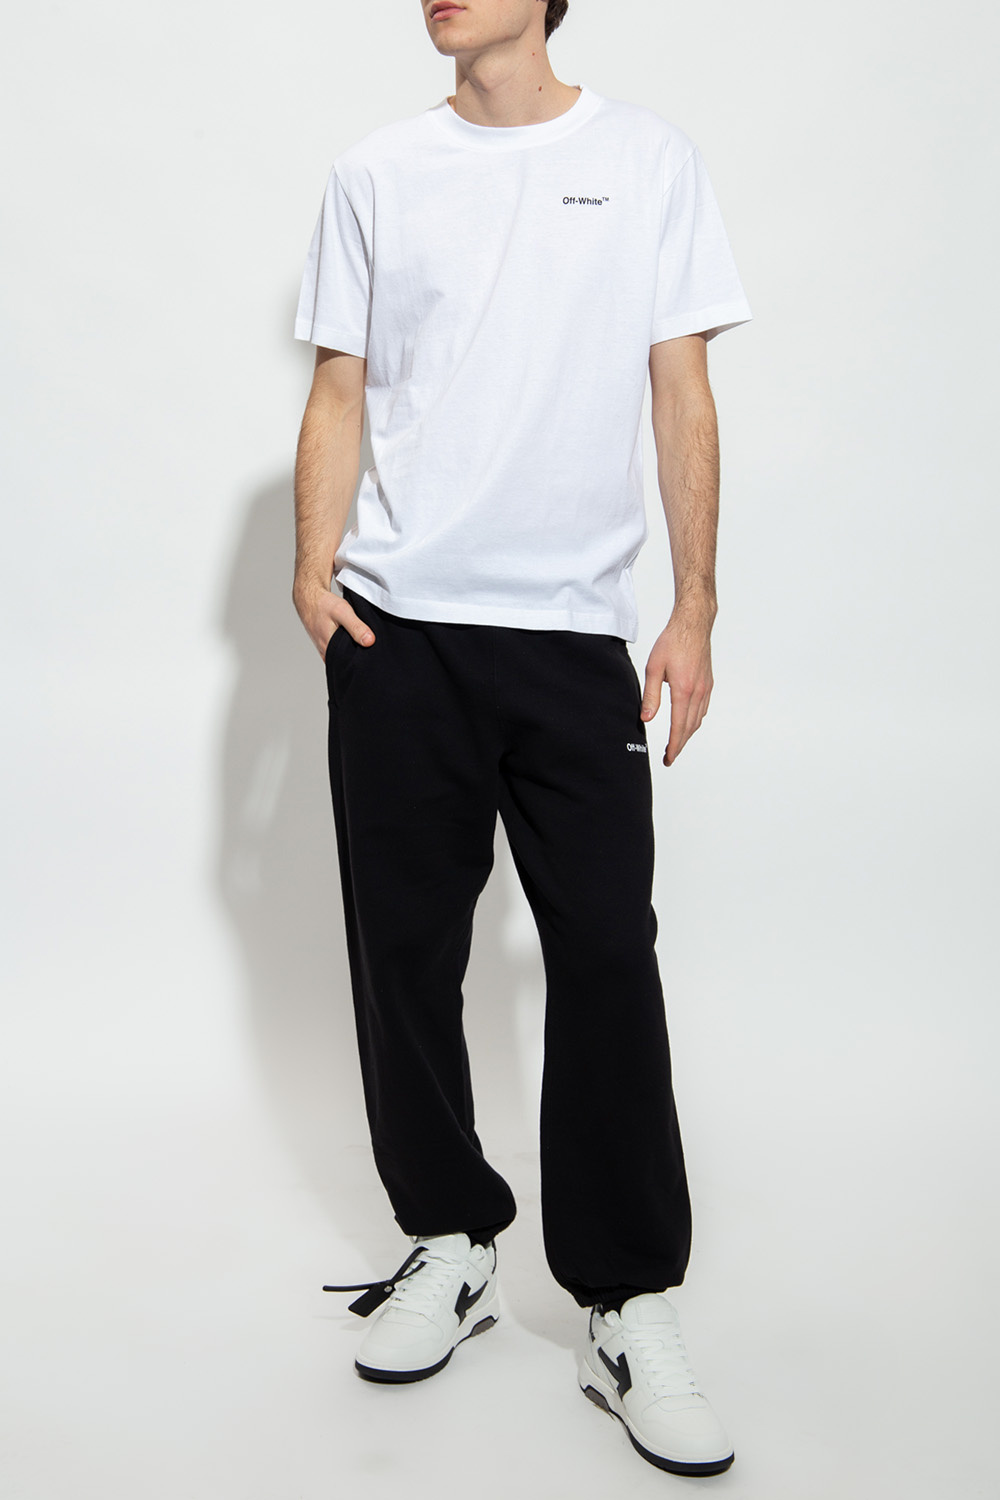 Off-White Printed T-shirt | Men's Clothing | Vitkac